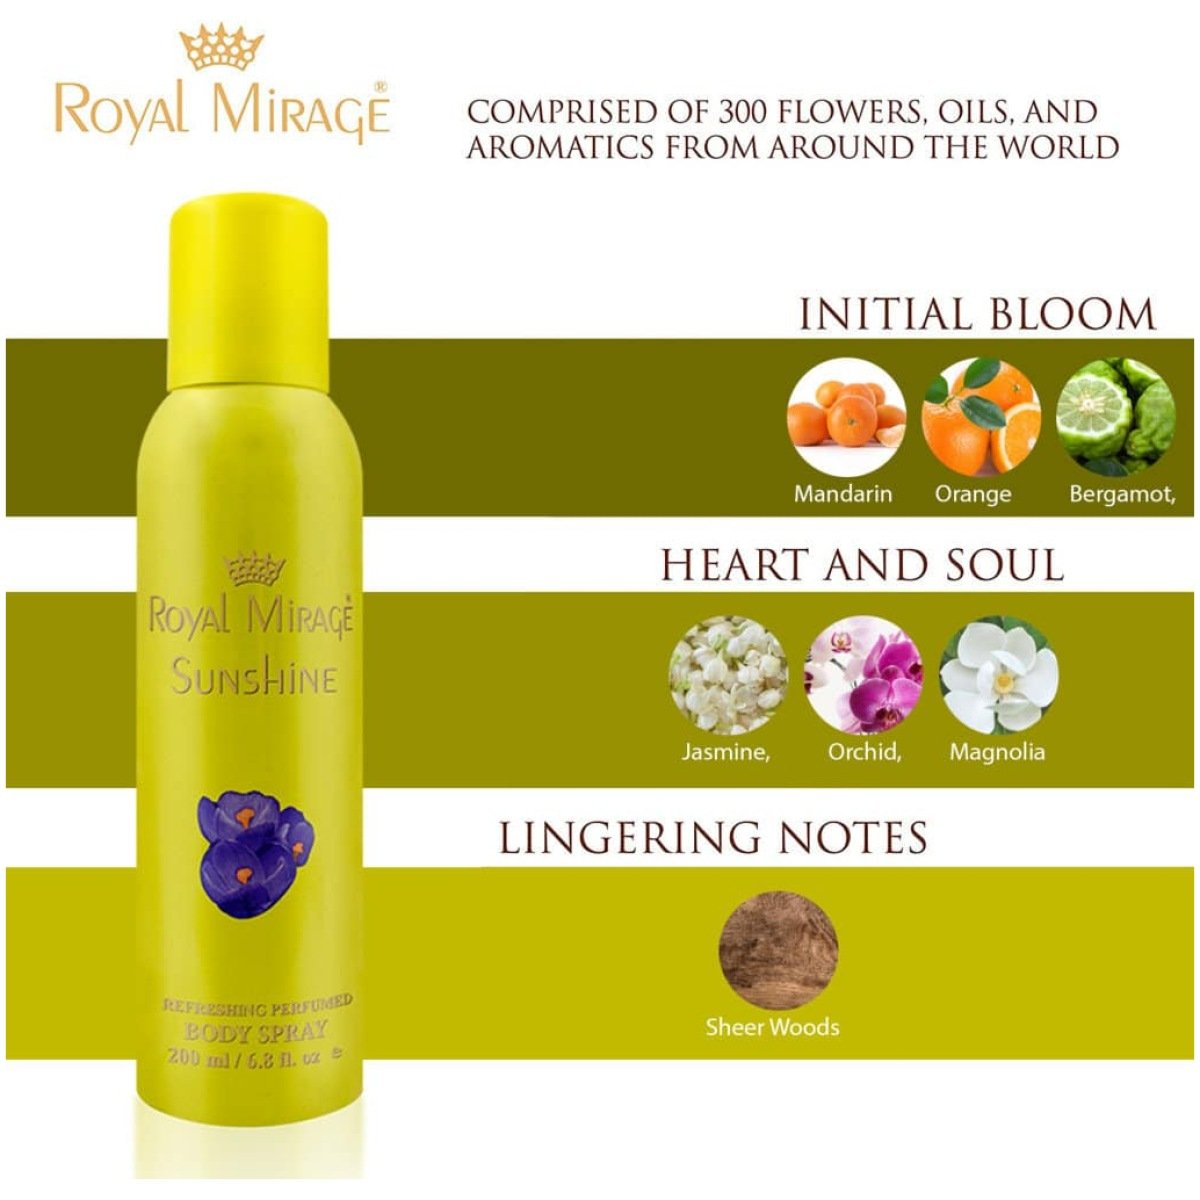 Royal Mirage Sunshine Perfumed Body Deodorant Spray 200ml